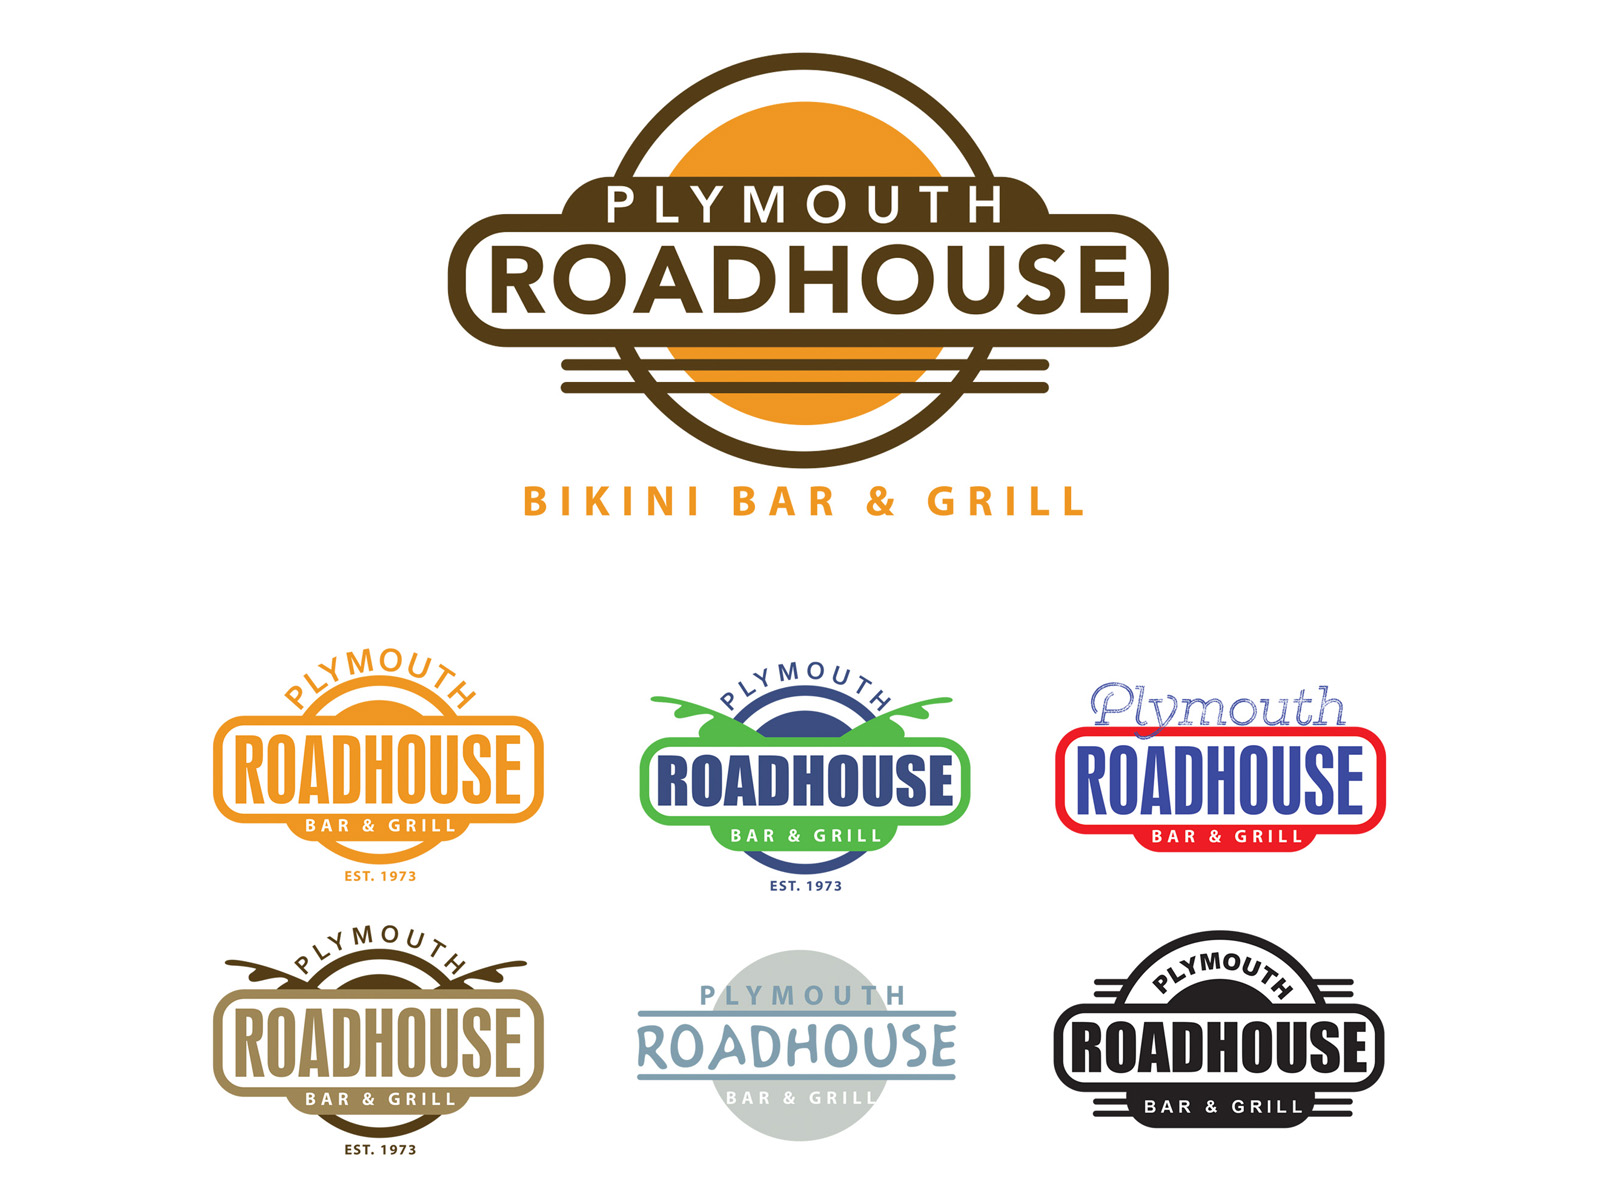 Plymouth Roadhouse Logos